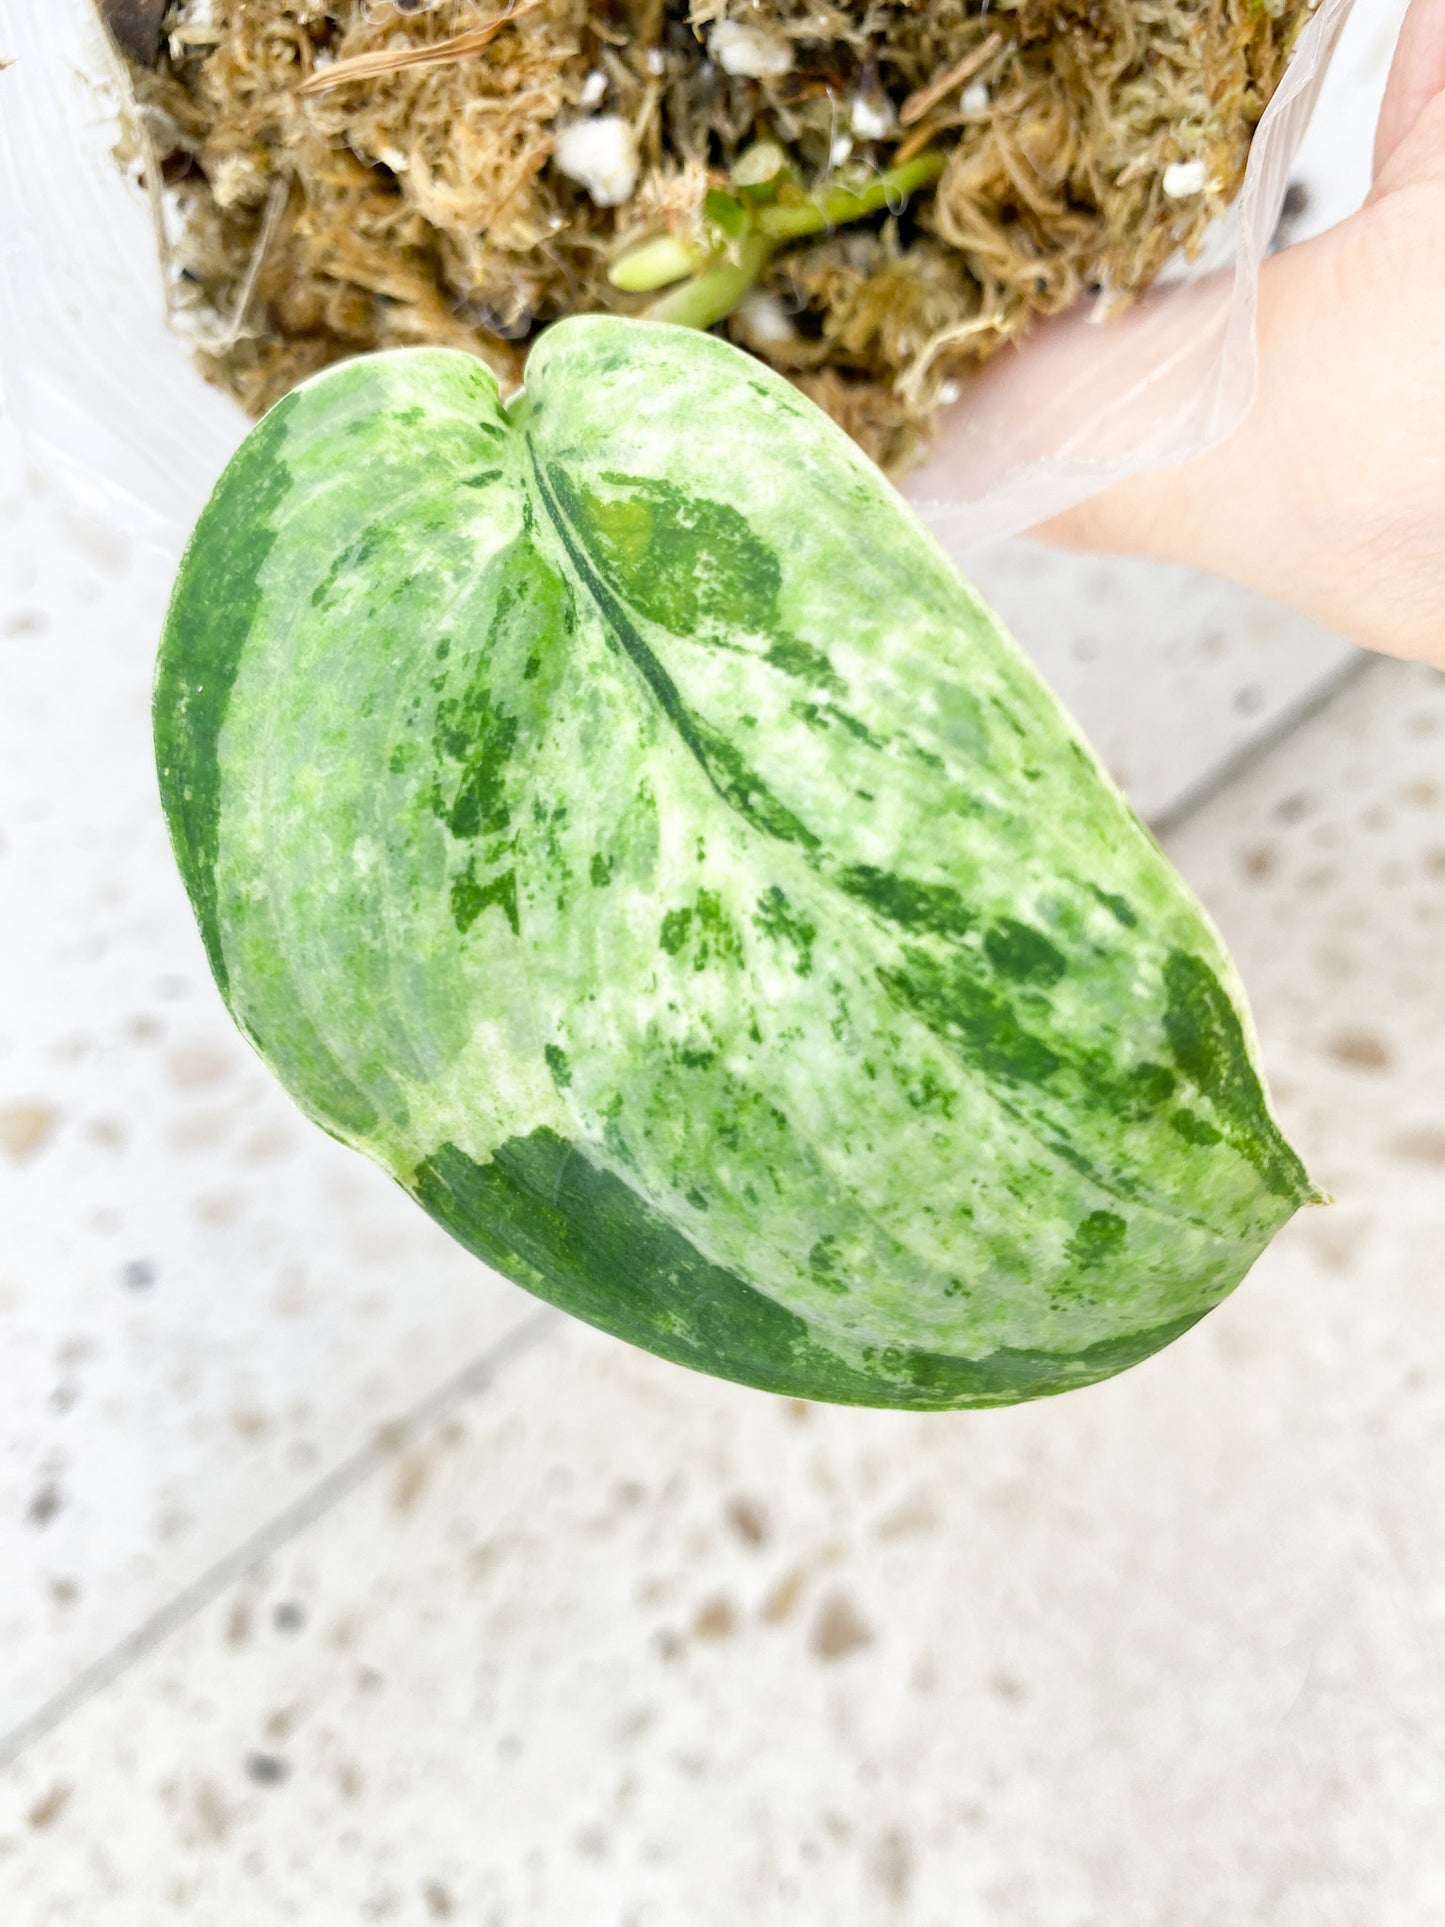 Scindapsus Jade Satin 'Creme Brulee' 1 leaf 1 sprout